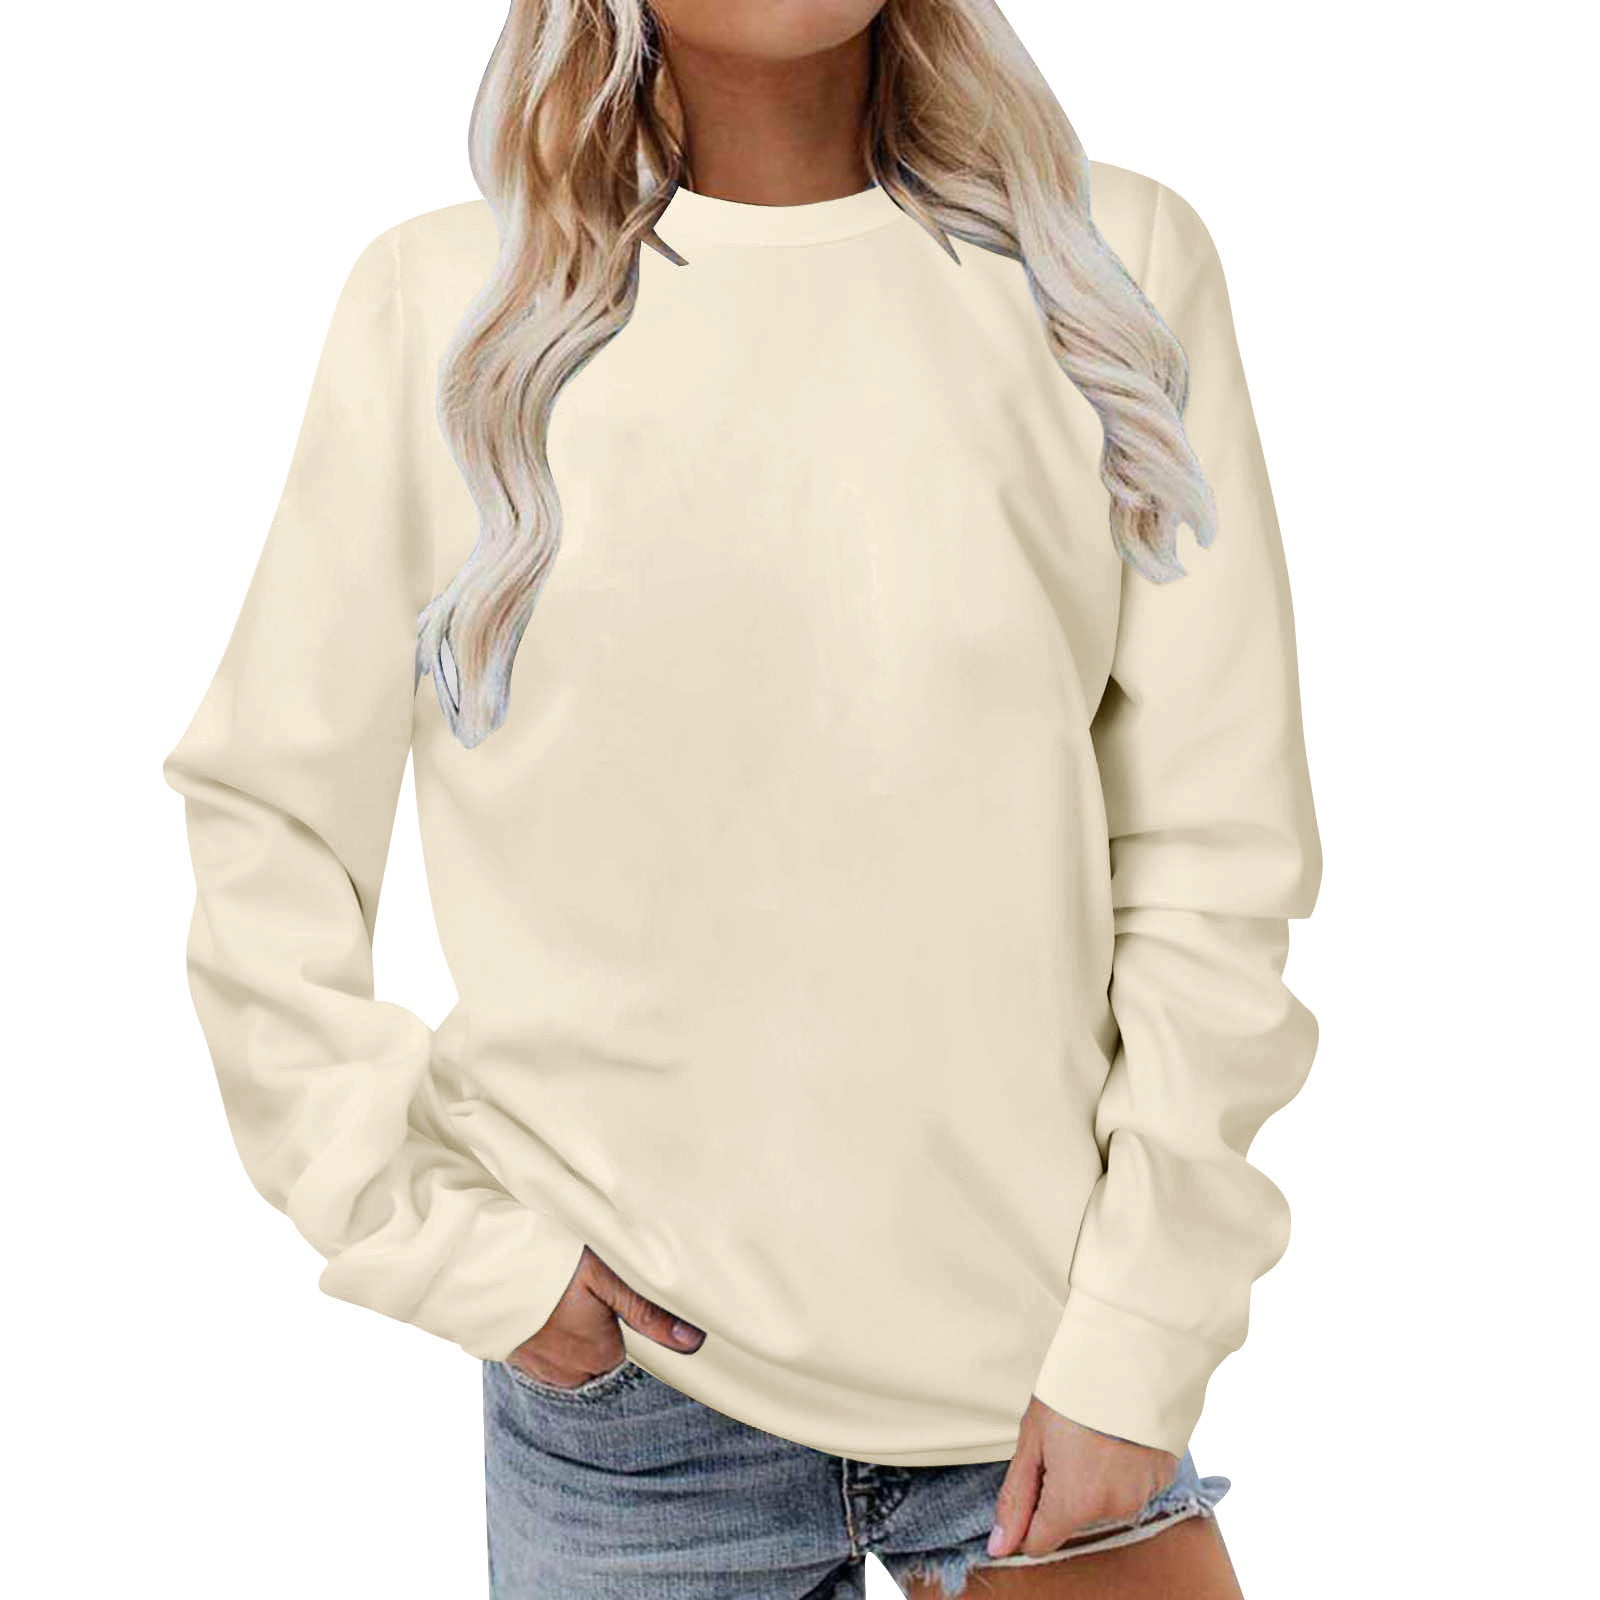 XFLWAM Women's Long Sleeve Sweatshirt Casual Crewneck Loose Fit Pullover  Hoodie Fleece Fall Tops White L 